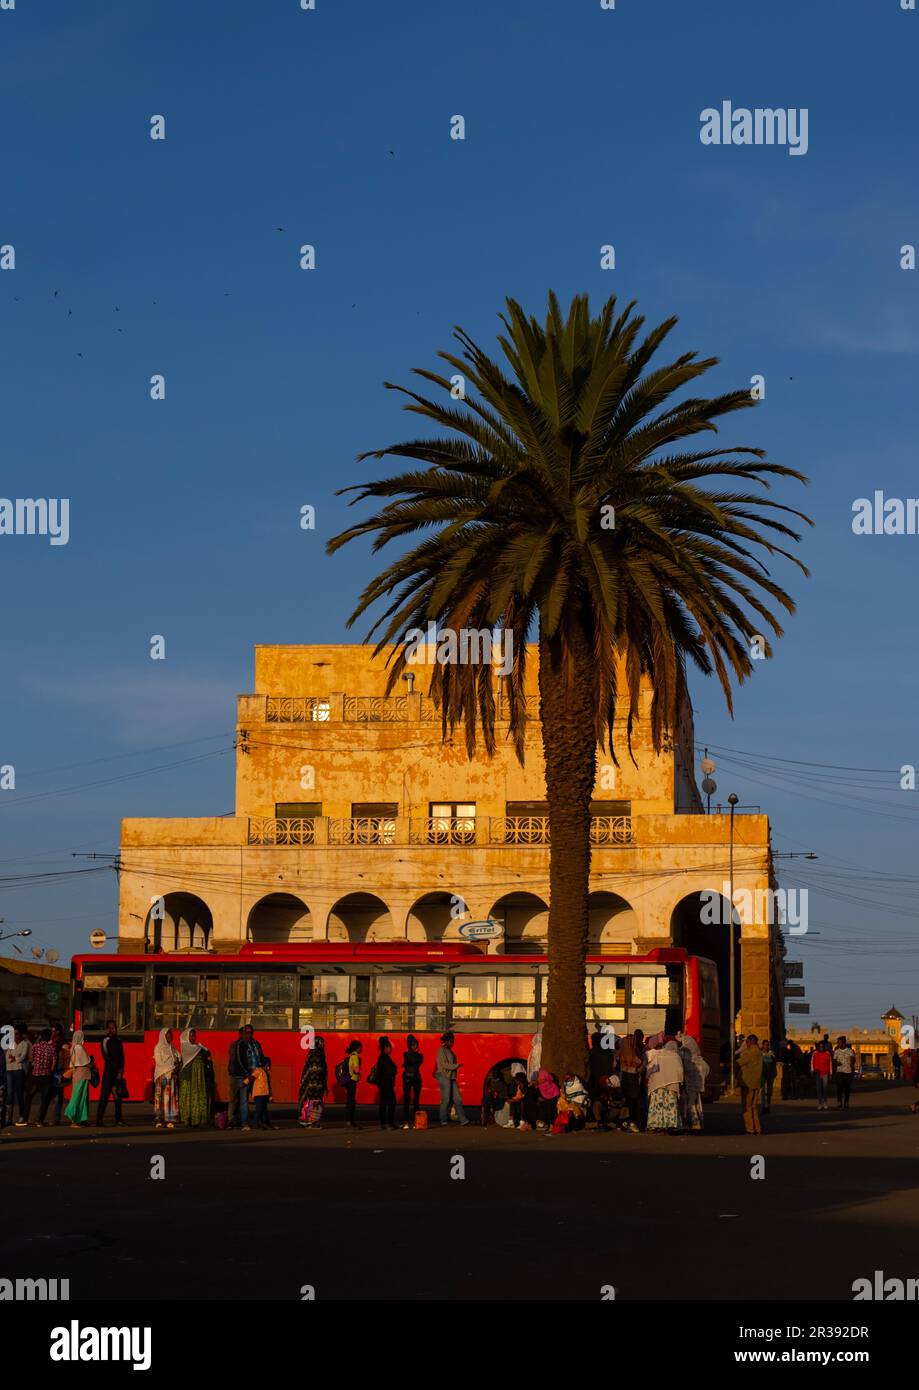 Eritrean people waiting in a bus station, Central Region, Asmara, Eritrea Stock Photo